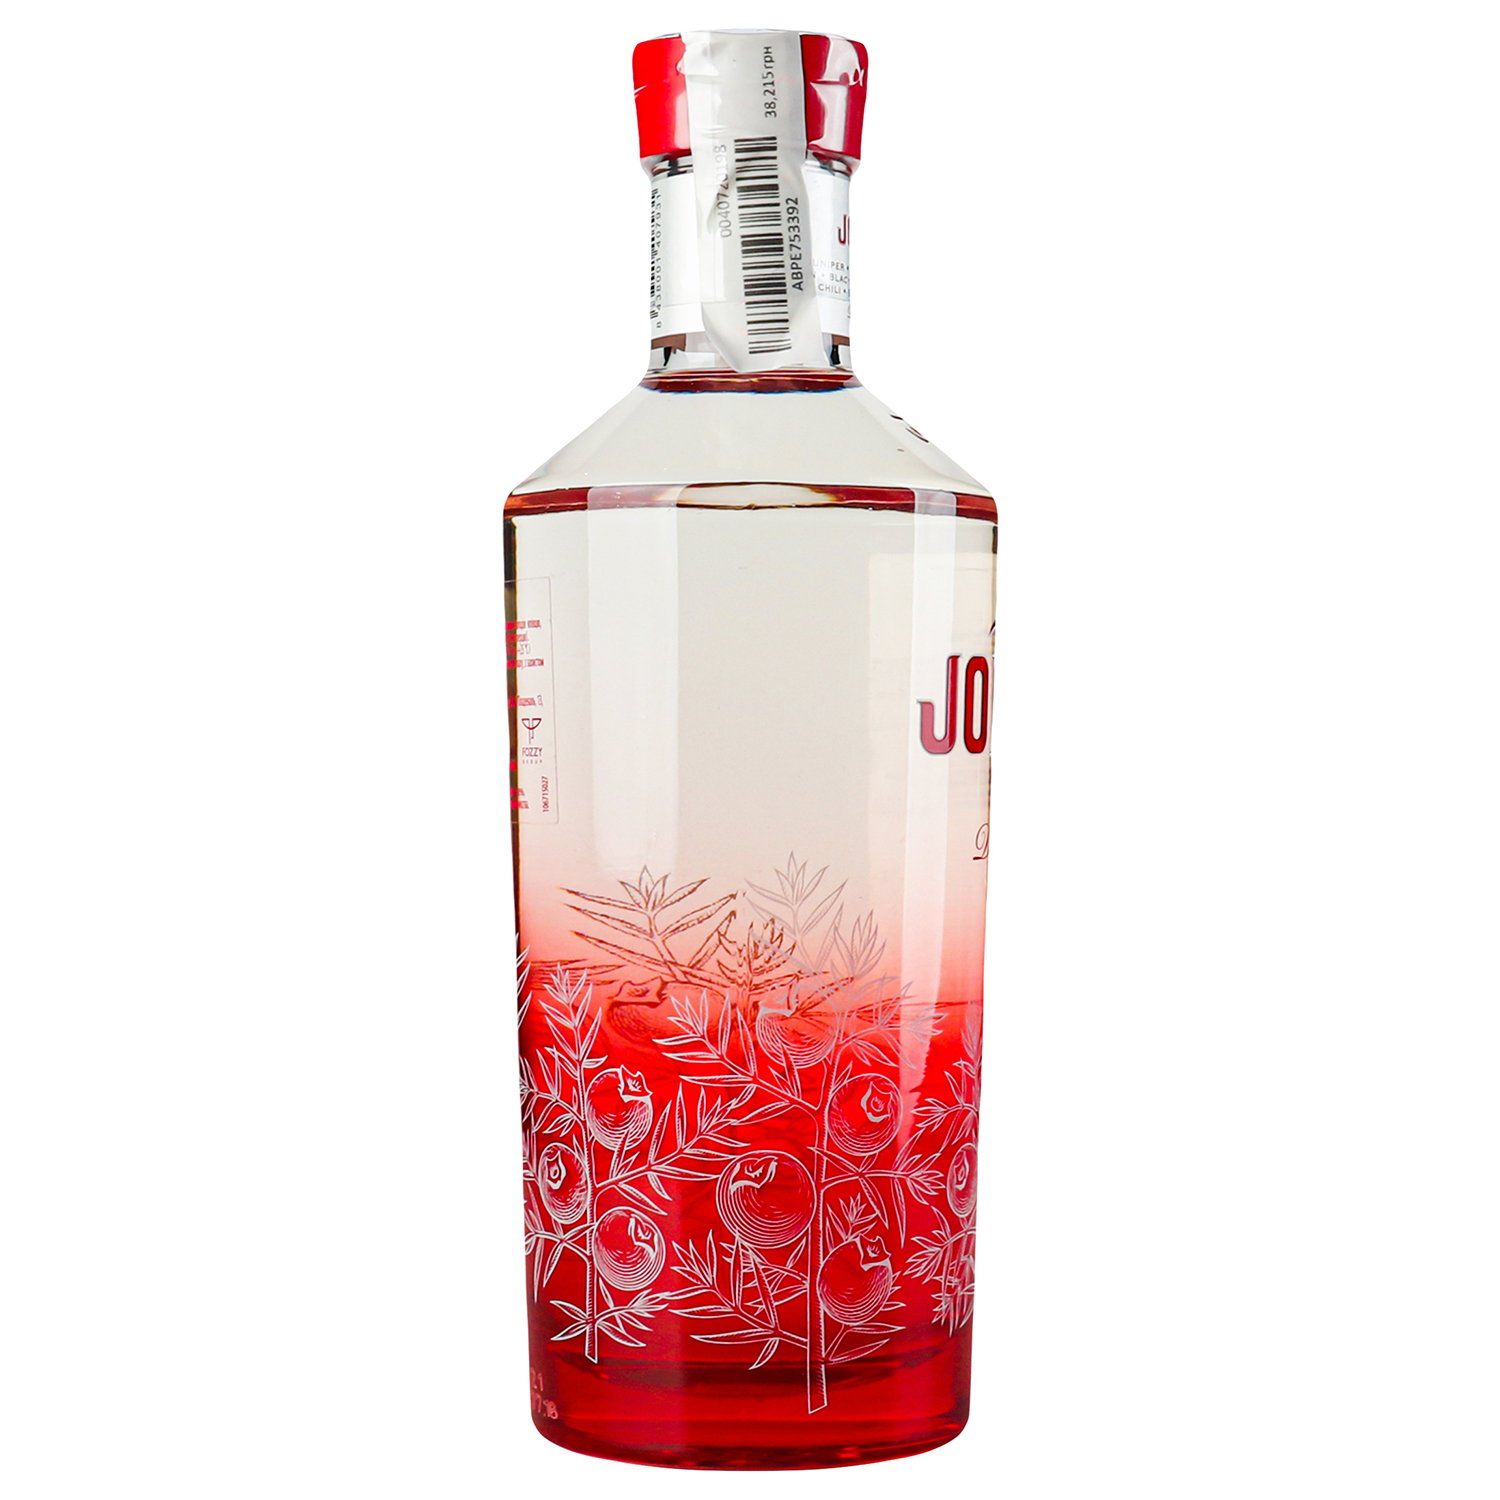 Джин Jodhpur Spicy London Dry Gin, 43%, 0,7 л (826419) - фото 4